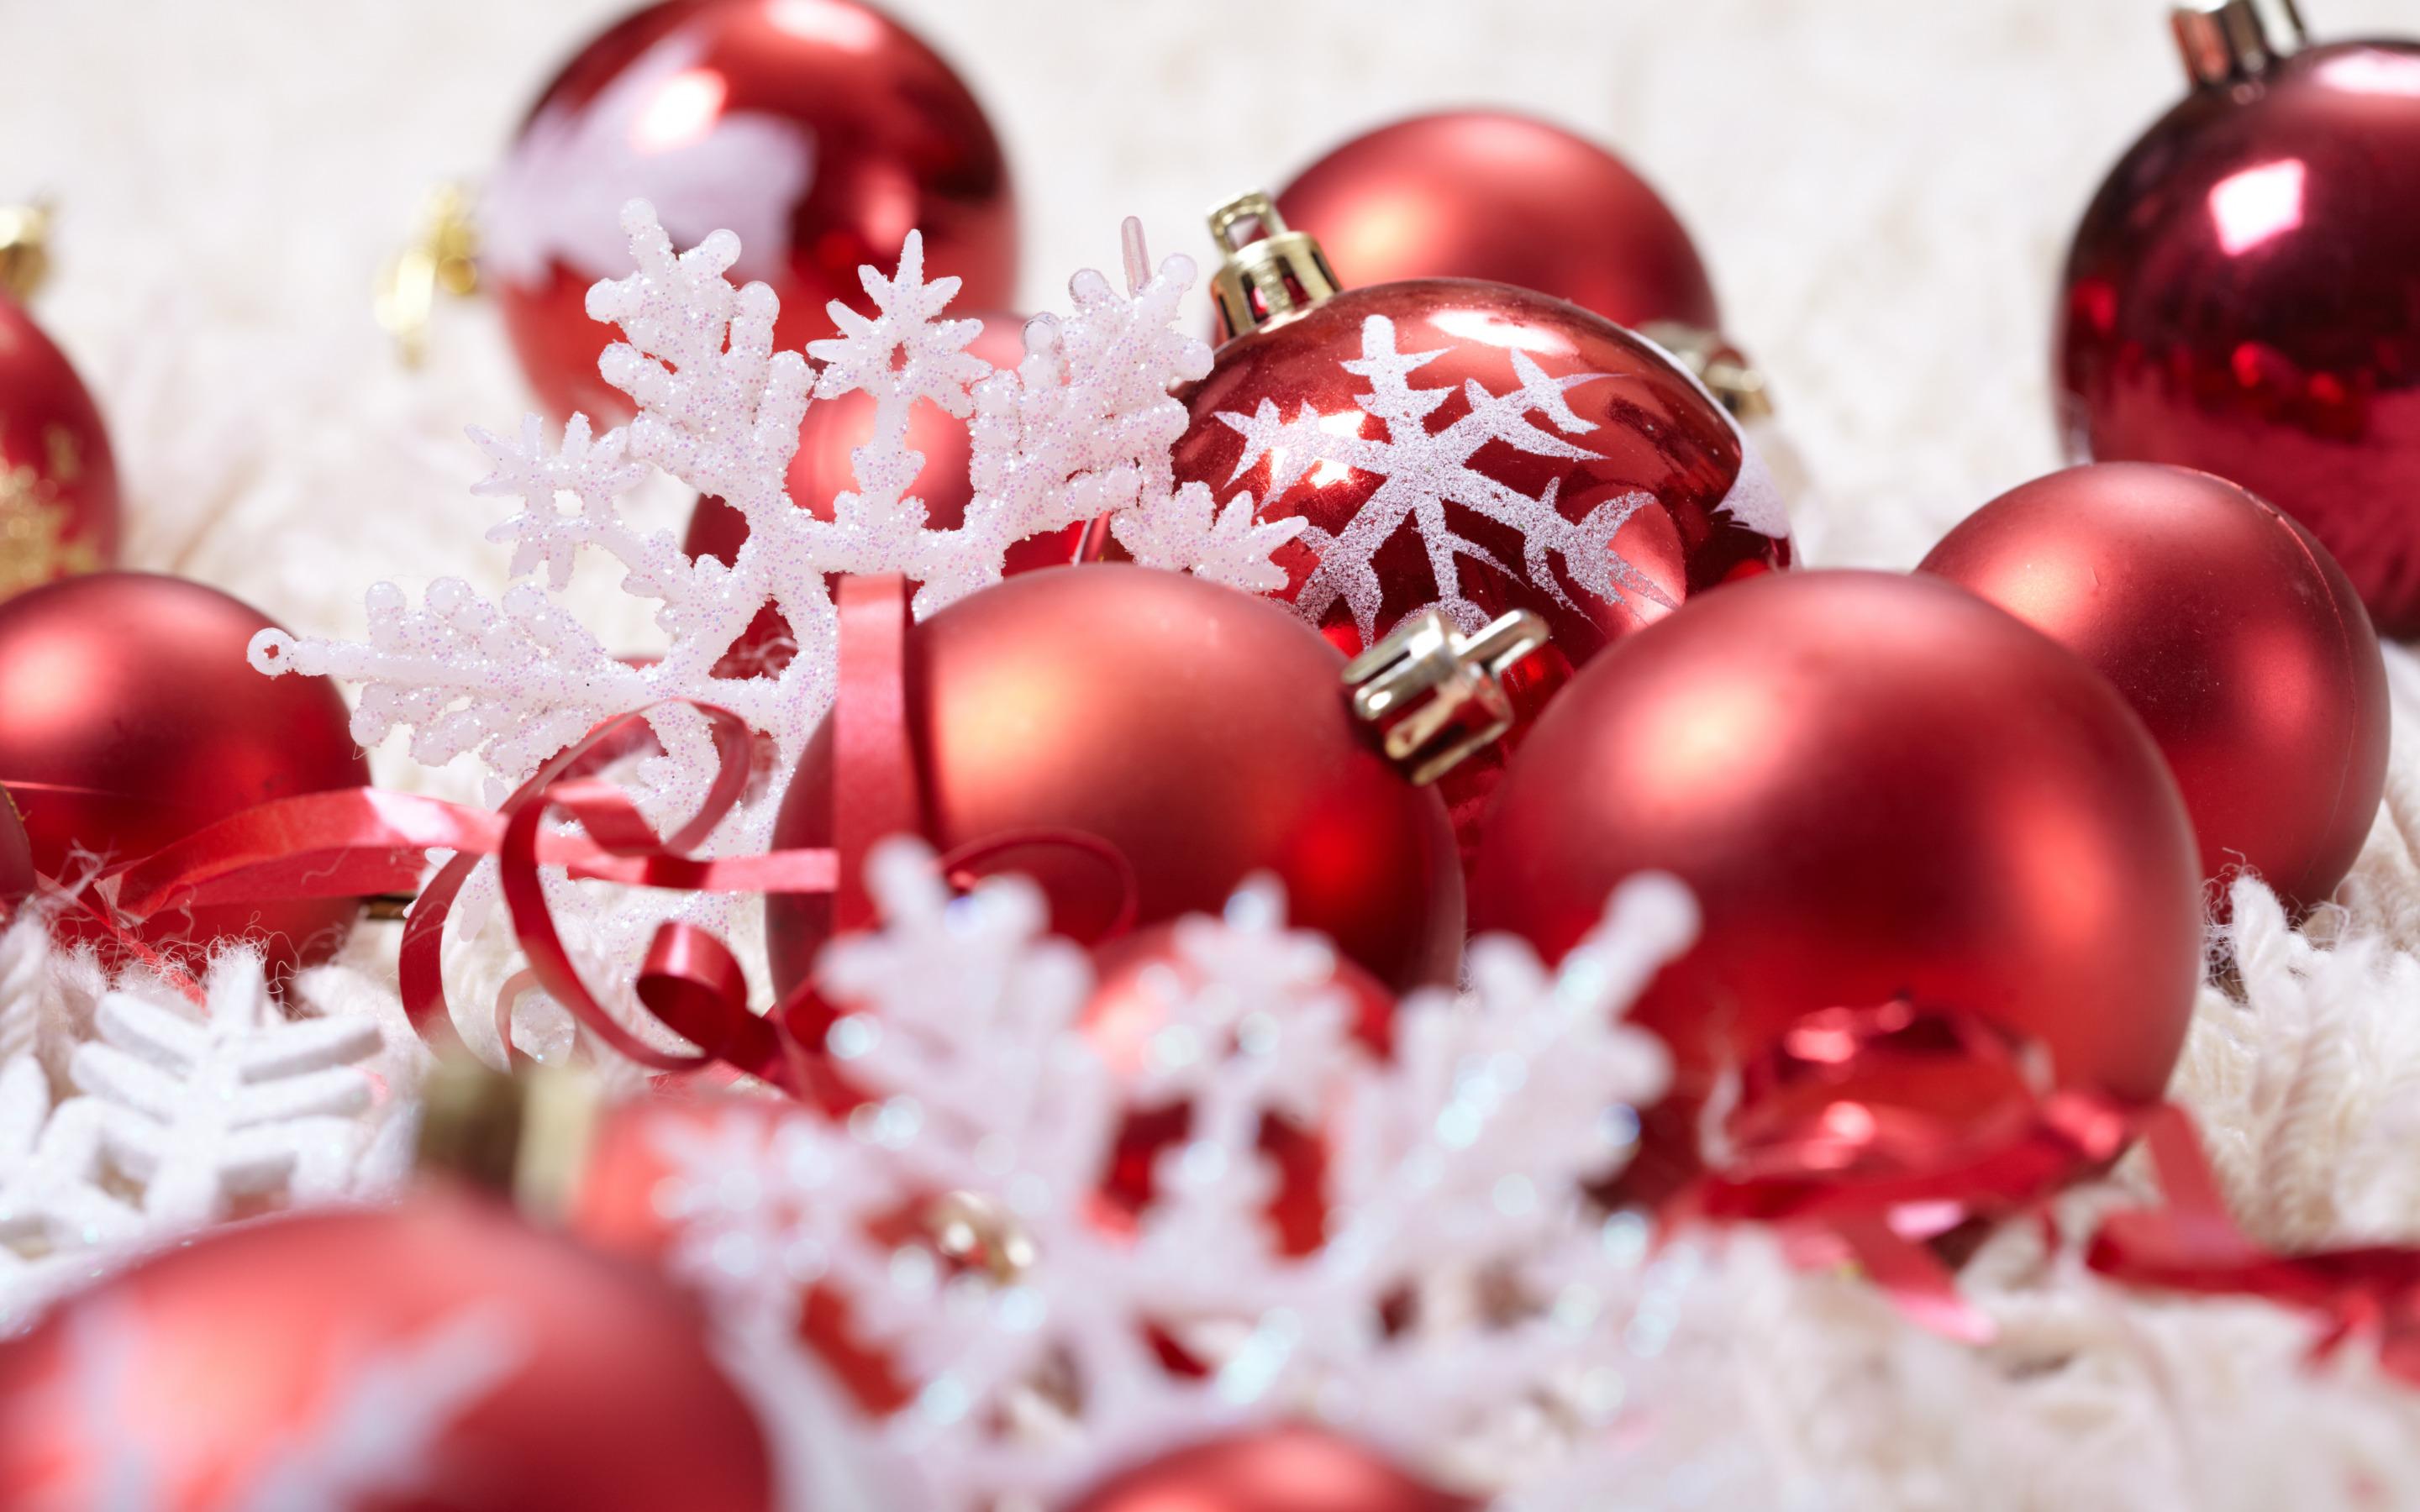 Download wallpaper Red christmas balls, white snowflakes